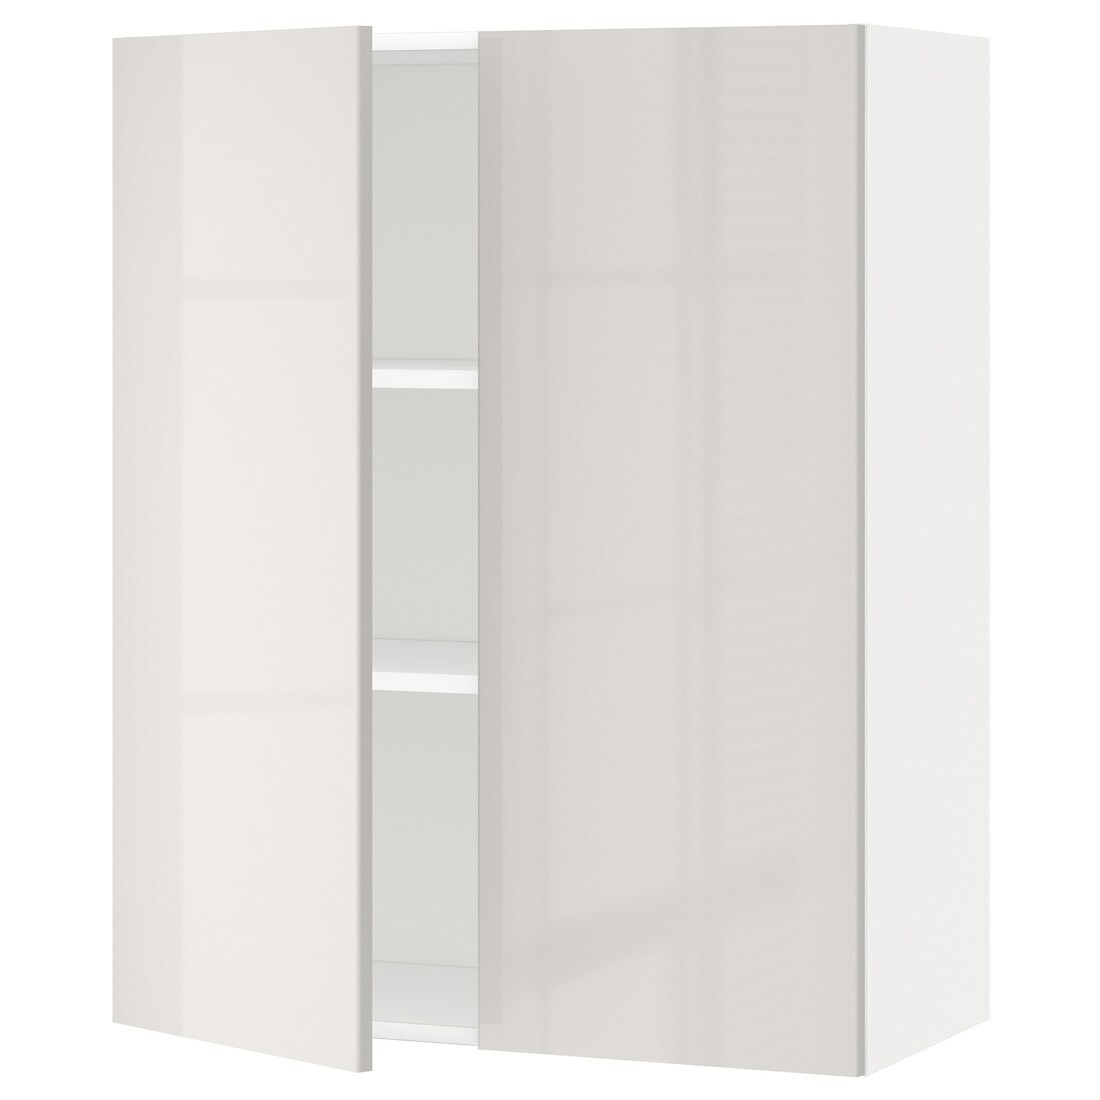 IKEA METOD МЕТОД Навесной шкаф с полками / 2 дверцы, белый / Ringhult светло-серый, 80x100 см 49459365 494.593.65